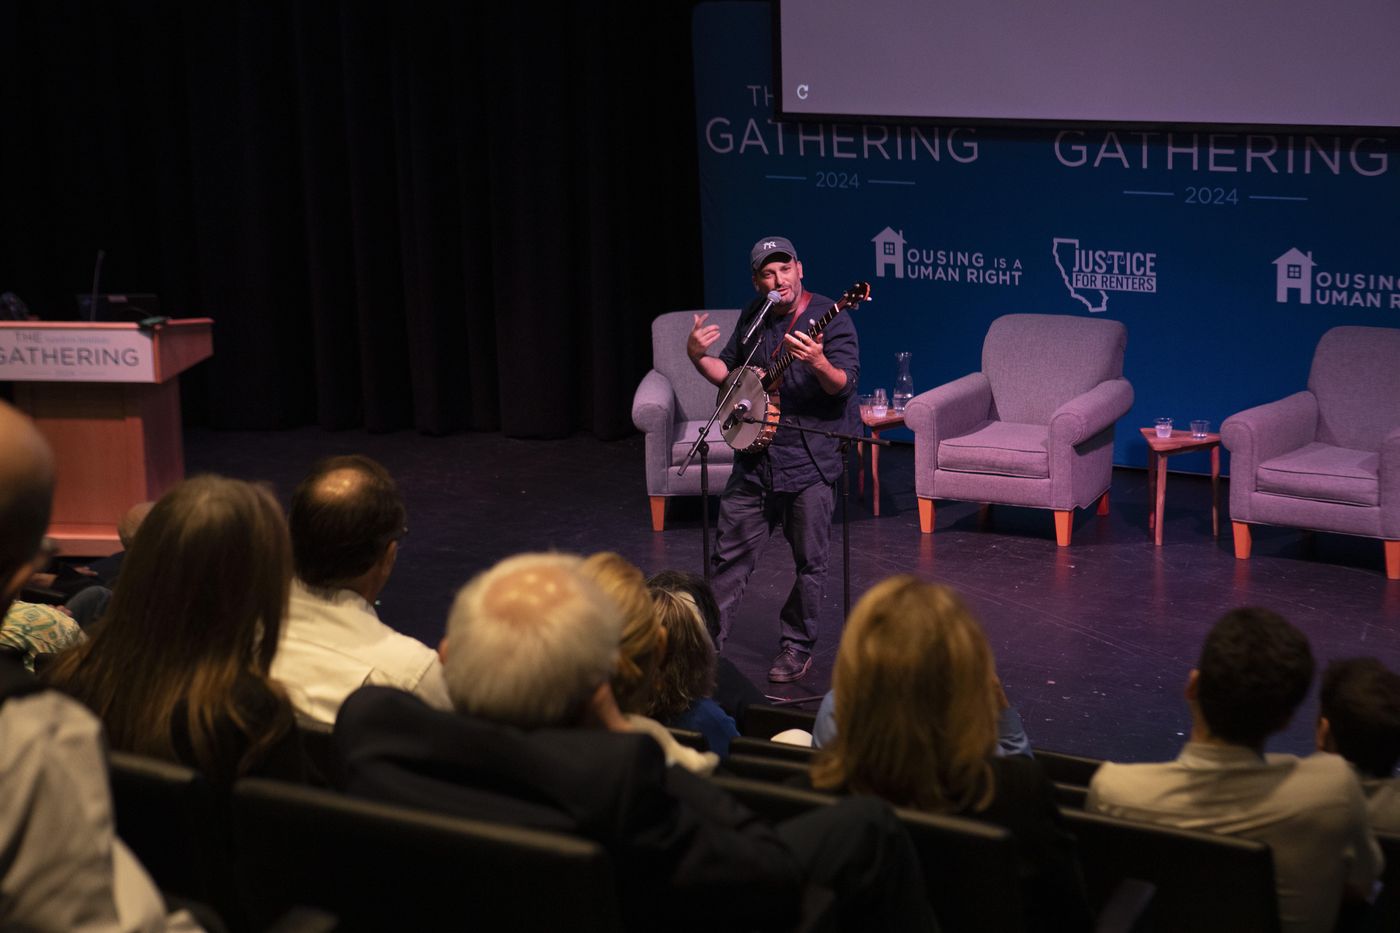 Filmmaker Josh Fox performs at The Sanders Institute Gathering